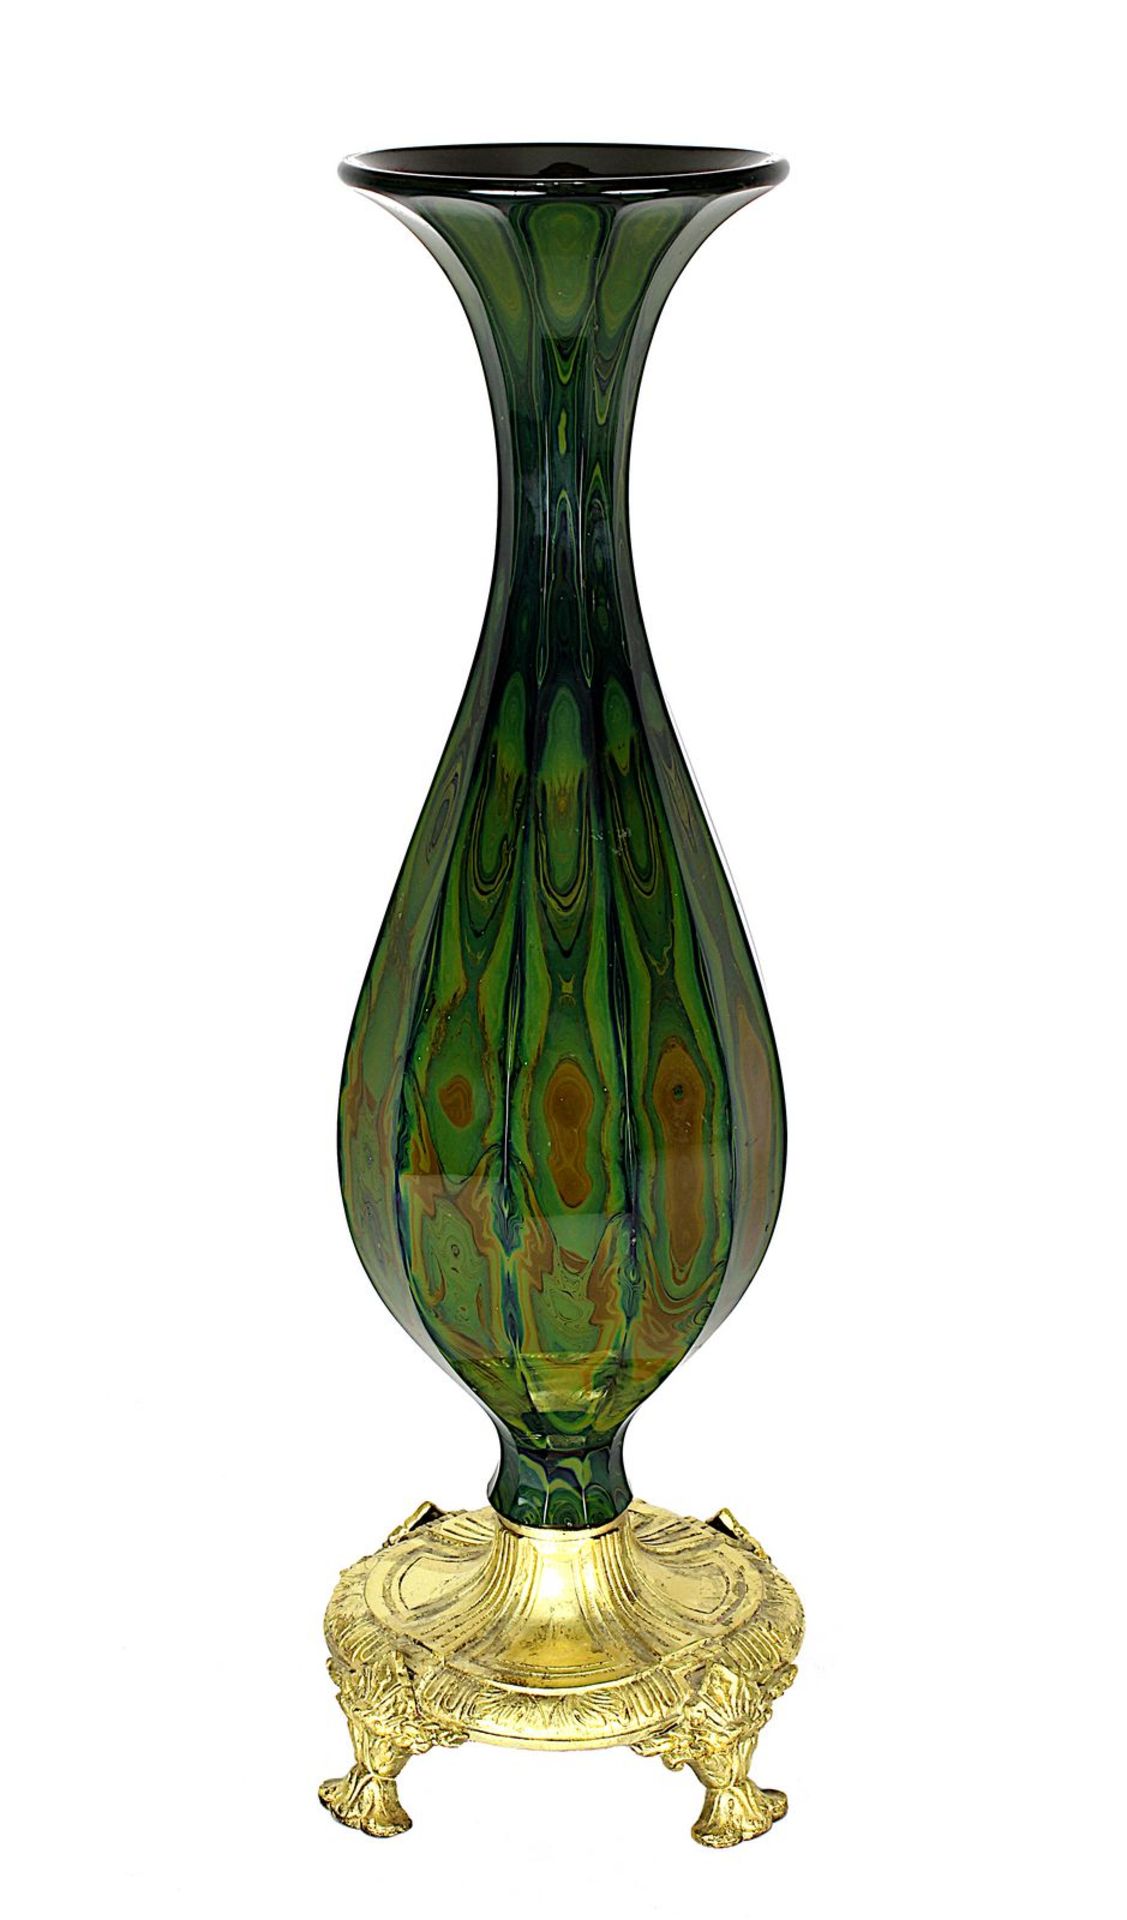 St. Louis Lithyalinglas-Vase mit vergoldeter Bronzebasis, Frankreich 19. Jh., blusterförmiger Korpus